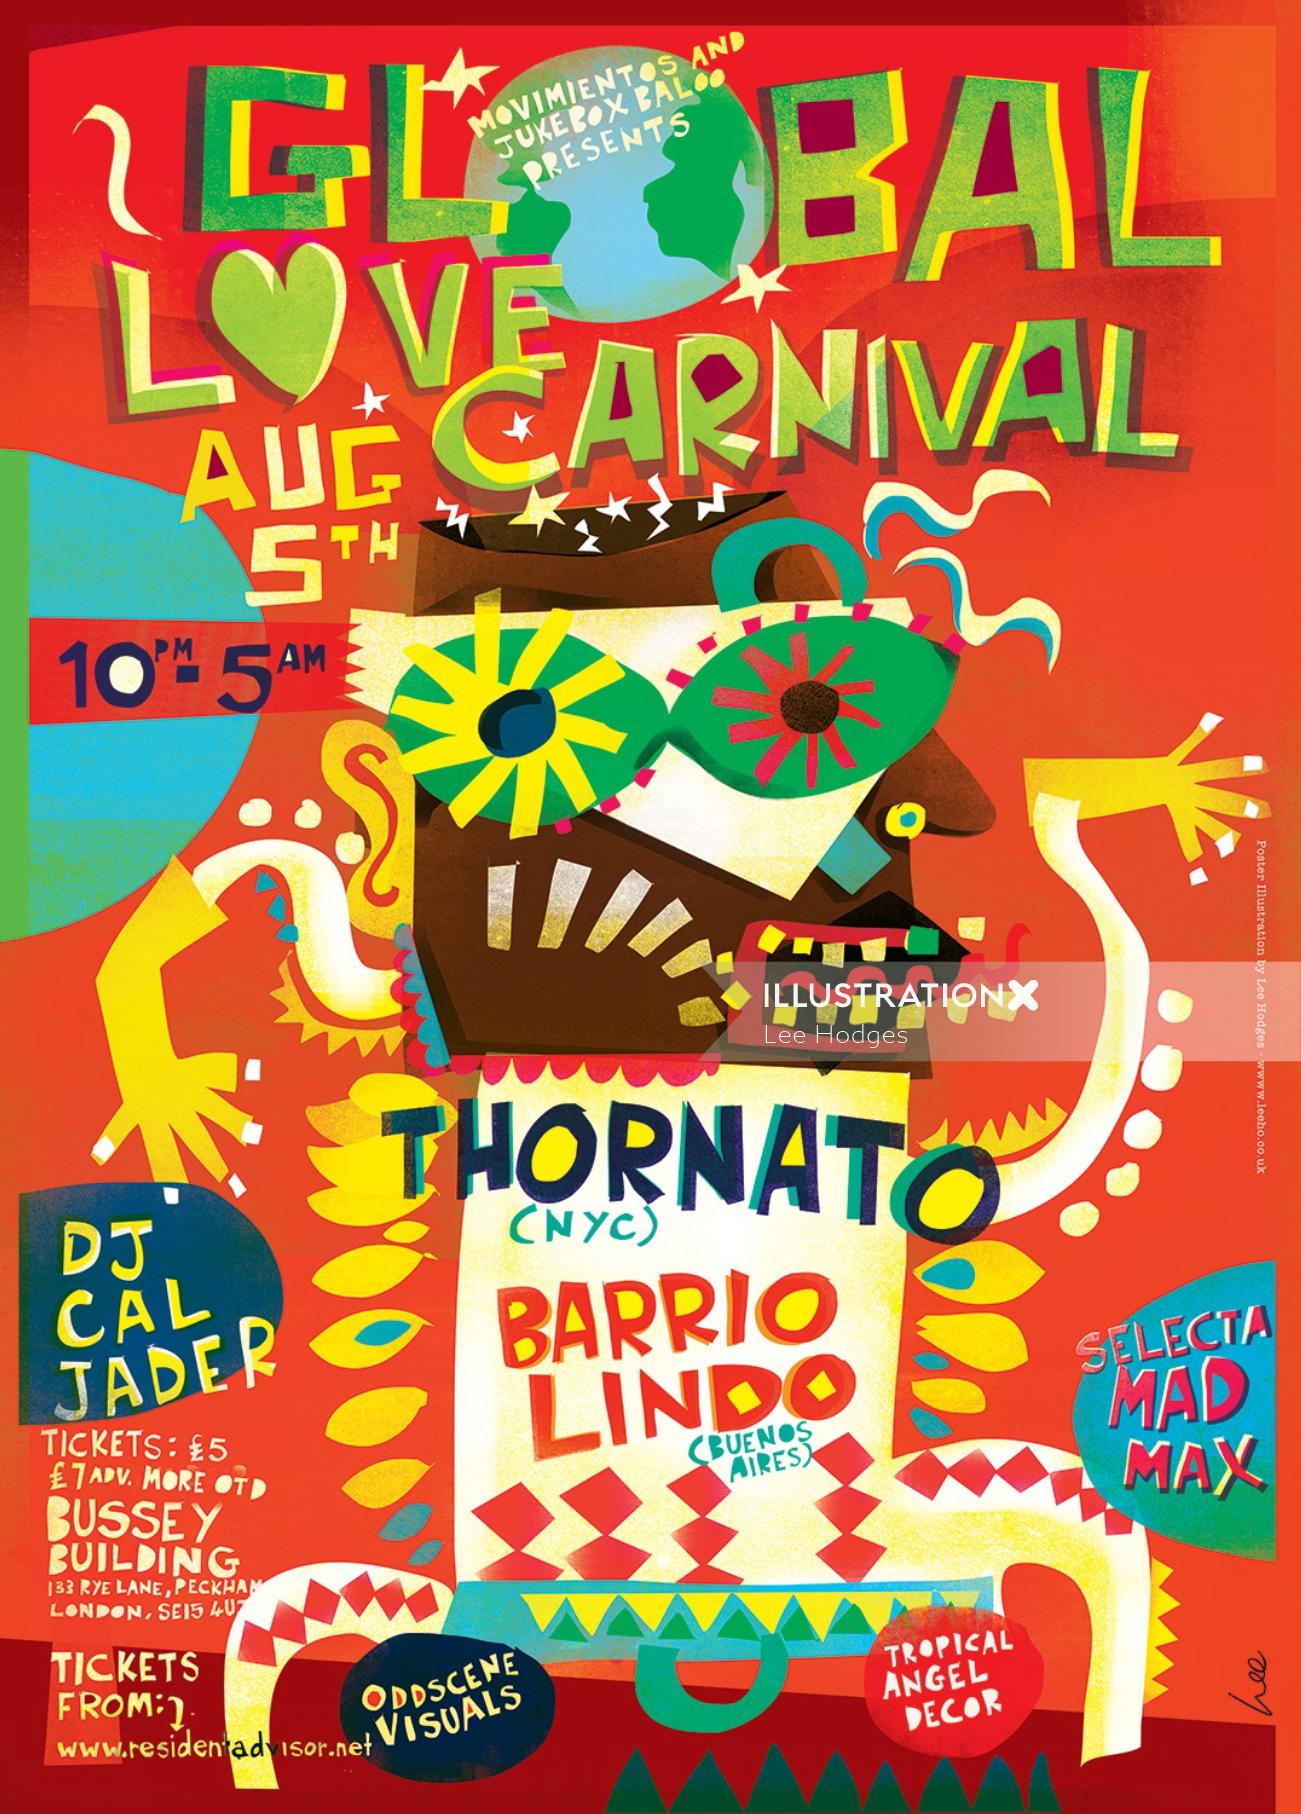 Love Carnival advertising poster